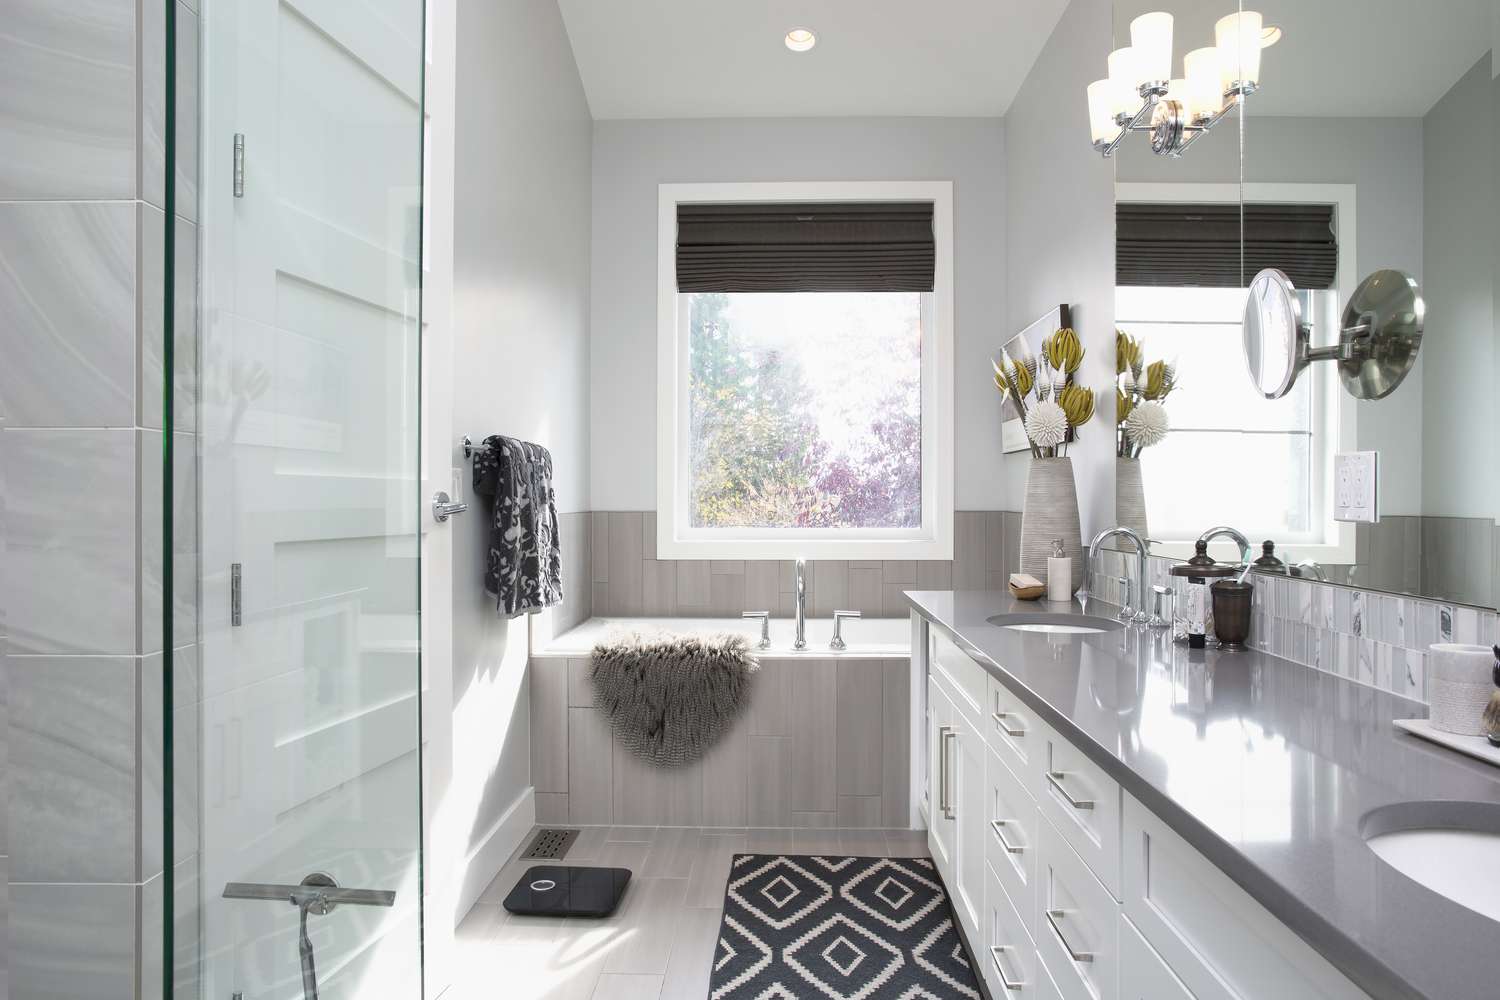 Elegant, modern home showcase interior bathroom